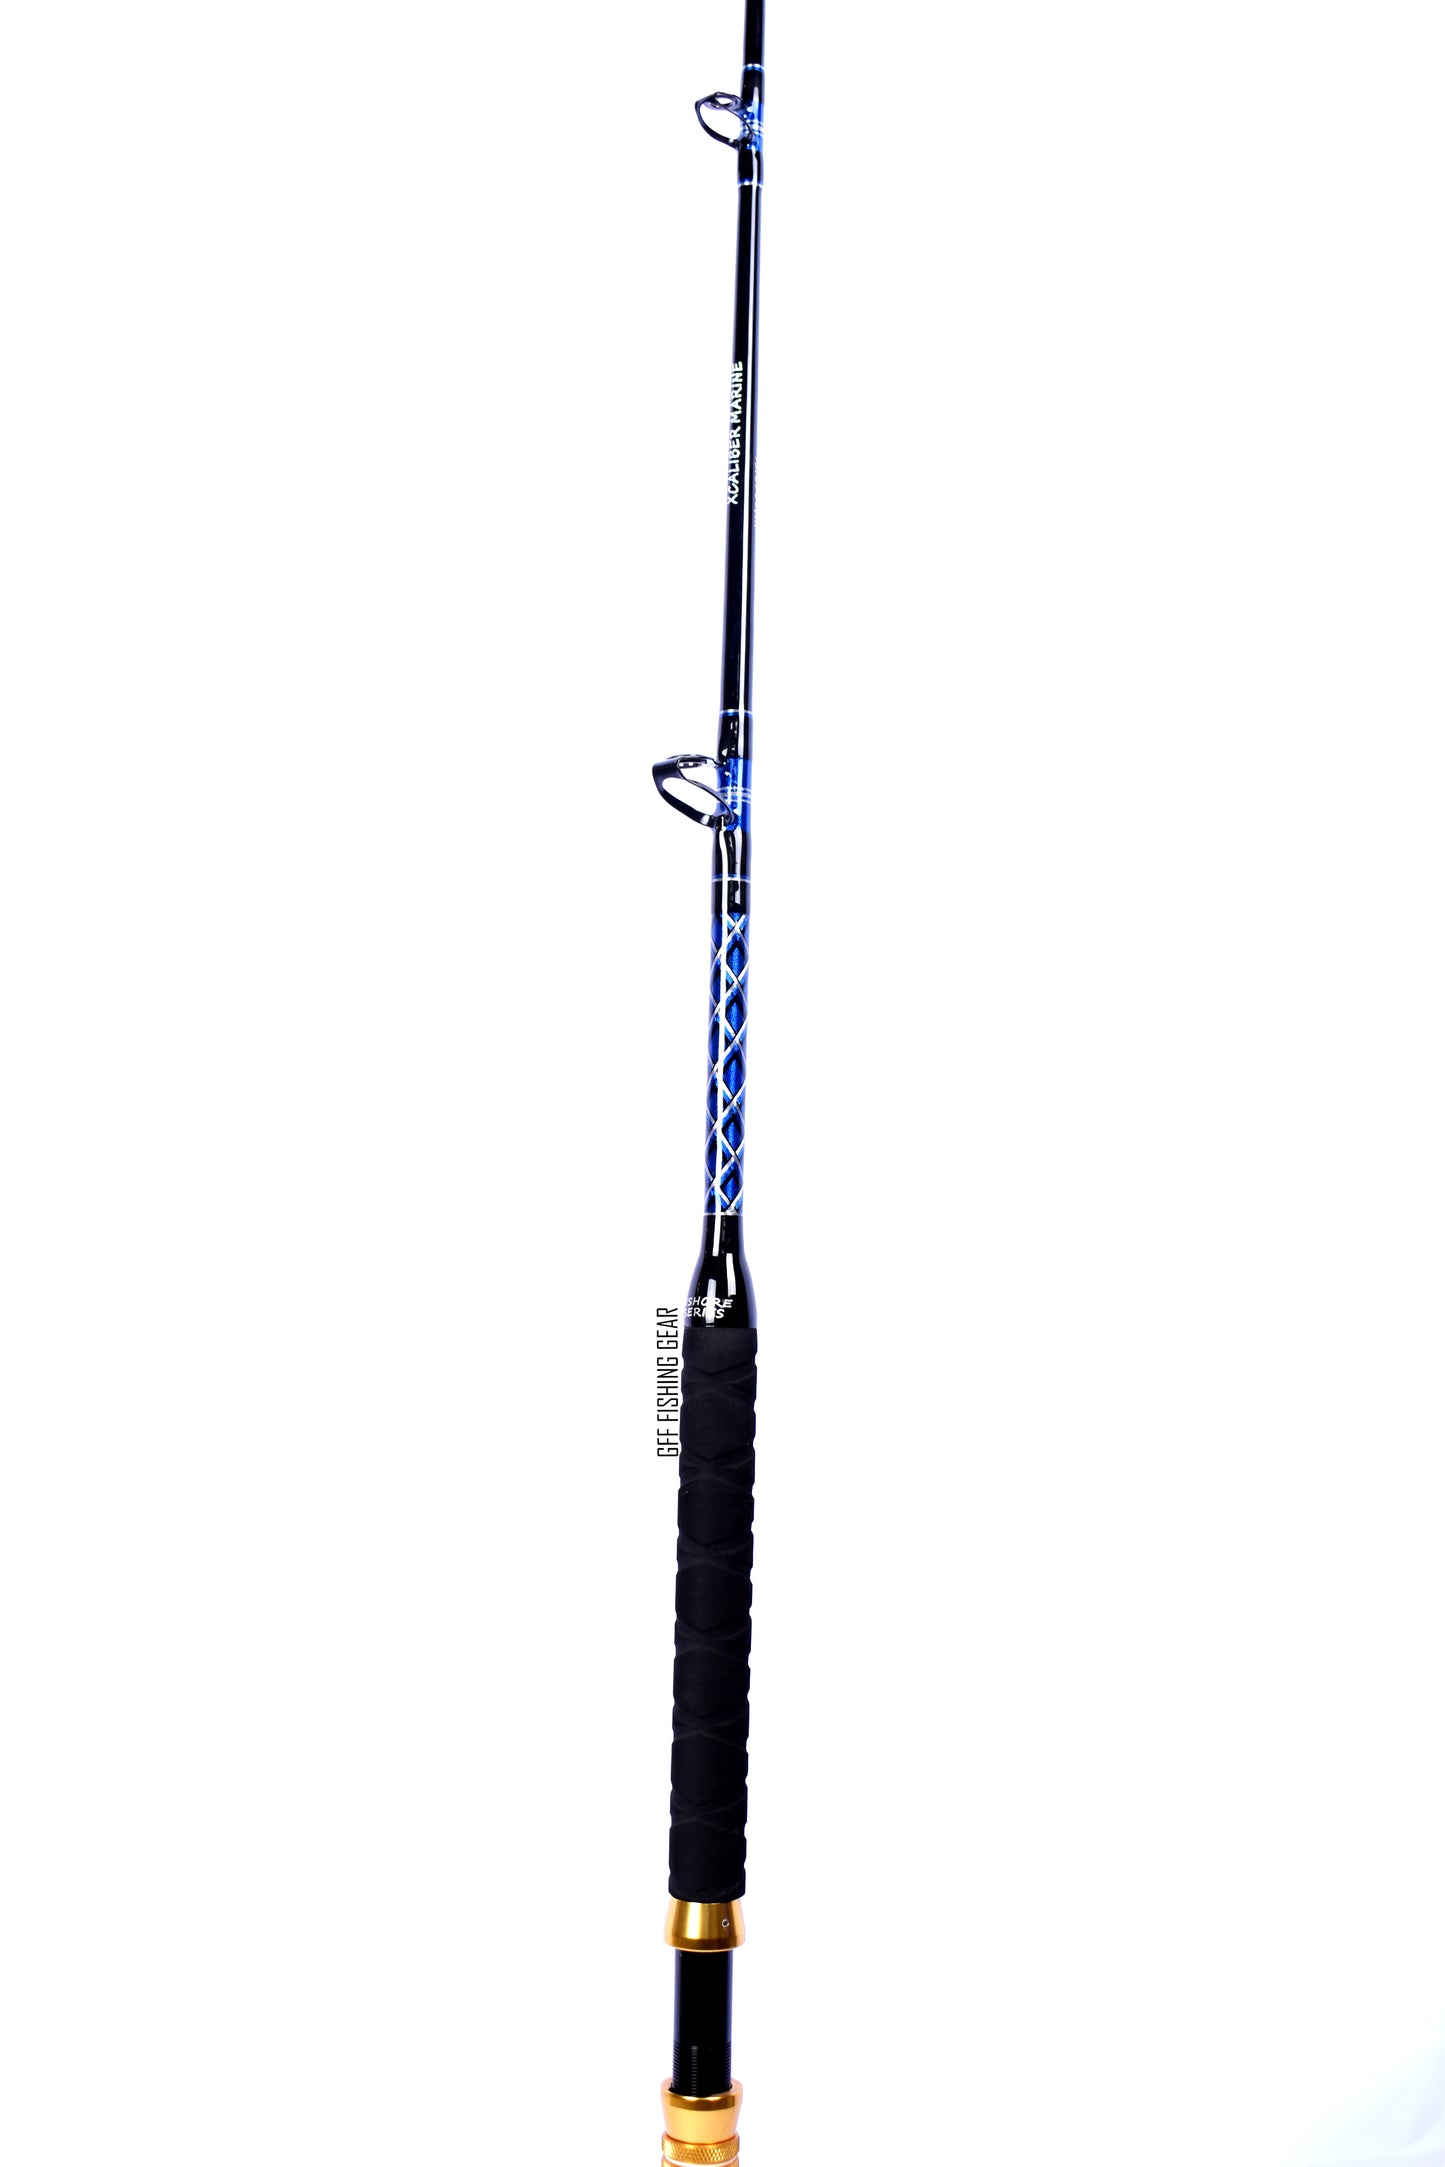 XCaliber Marine XM20401S6 Solid Trolling Fishing Rod